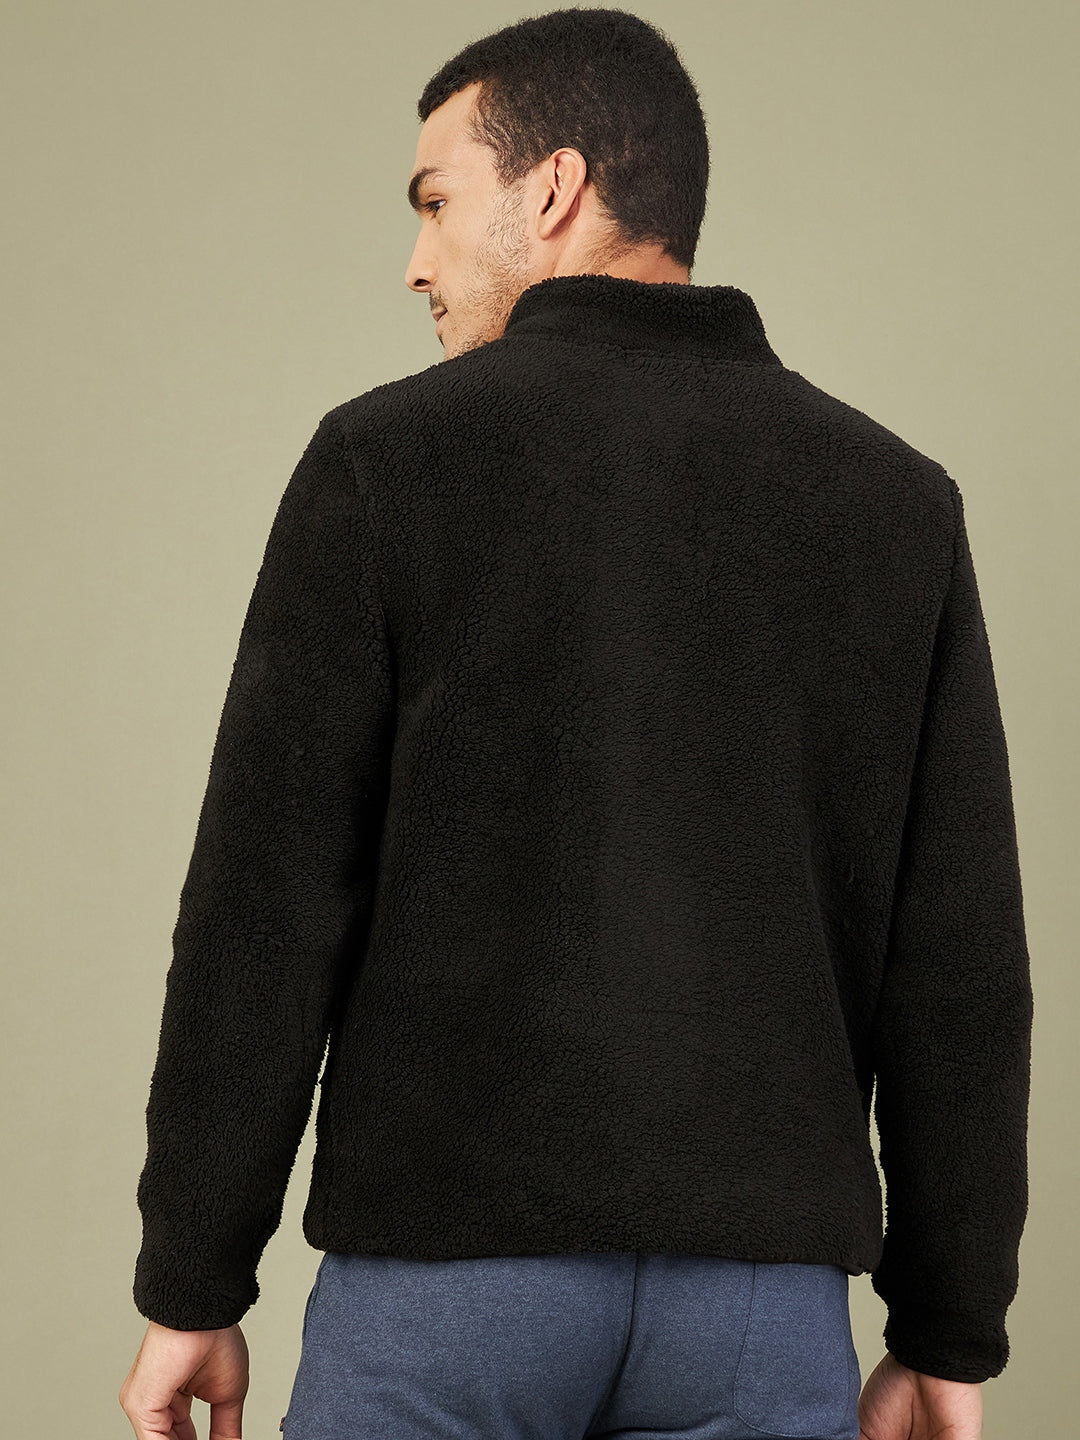 Men's Black Fur Zipper Sweatshirt - LYUSH-MASCLN